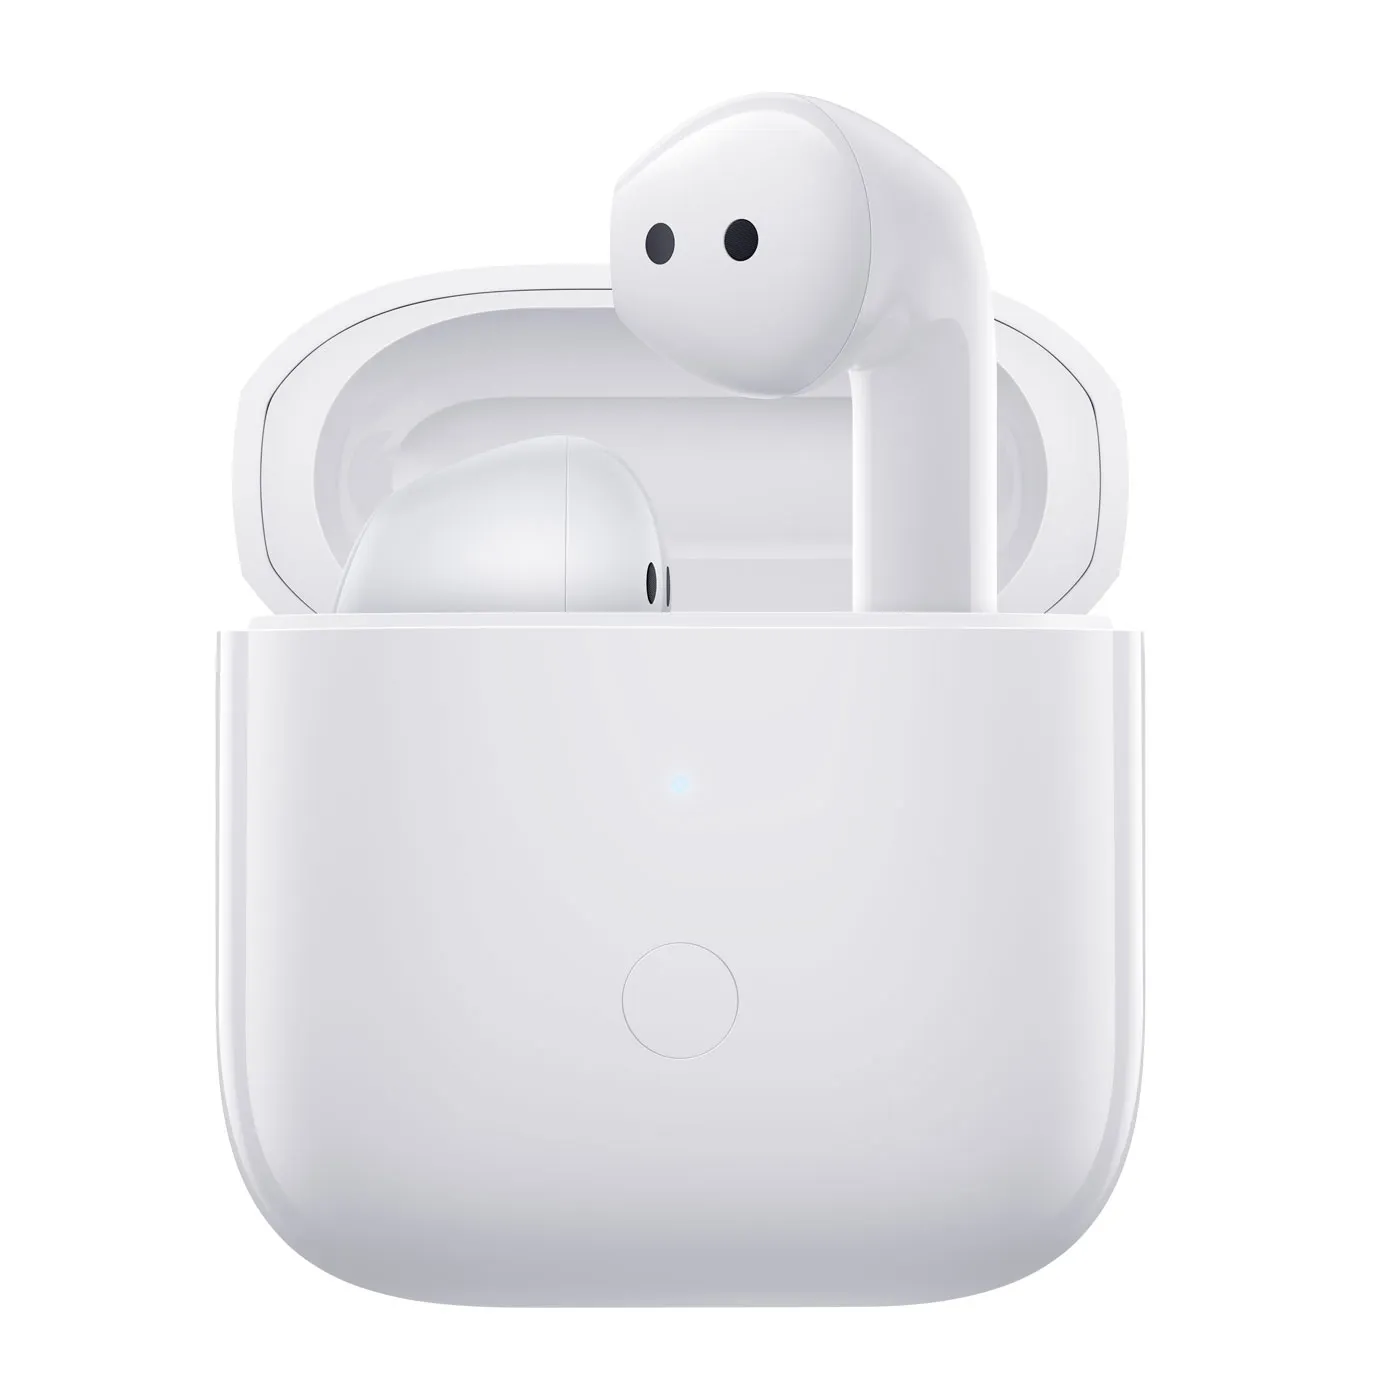 Audífonos REDMI Inalámbricos Bluetooth In Ear Buds 3 Blancos